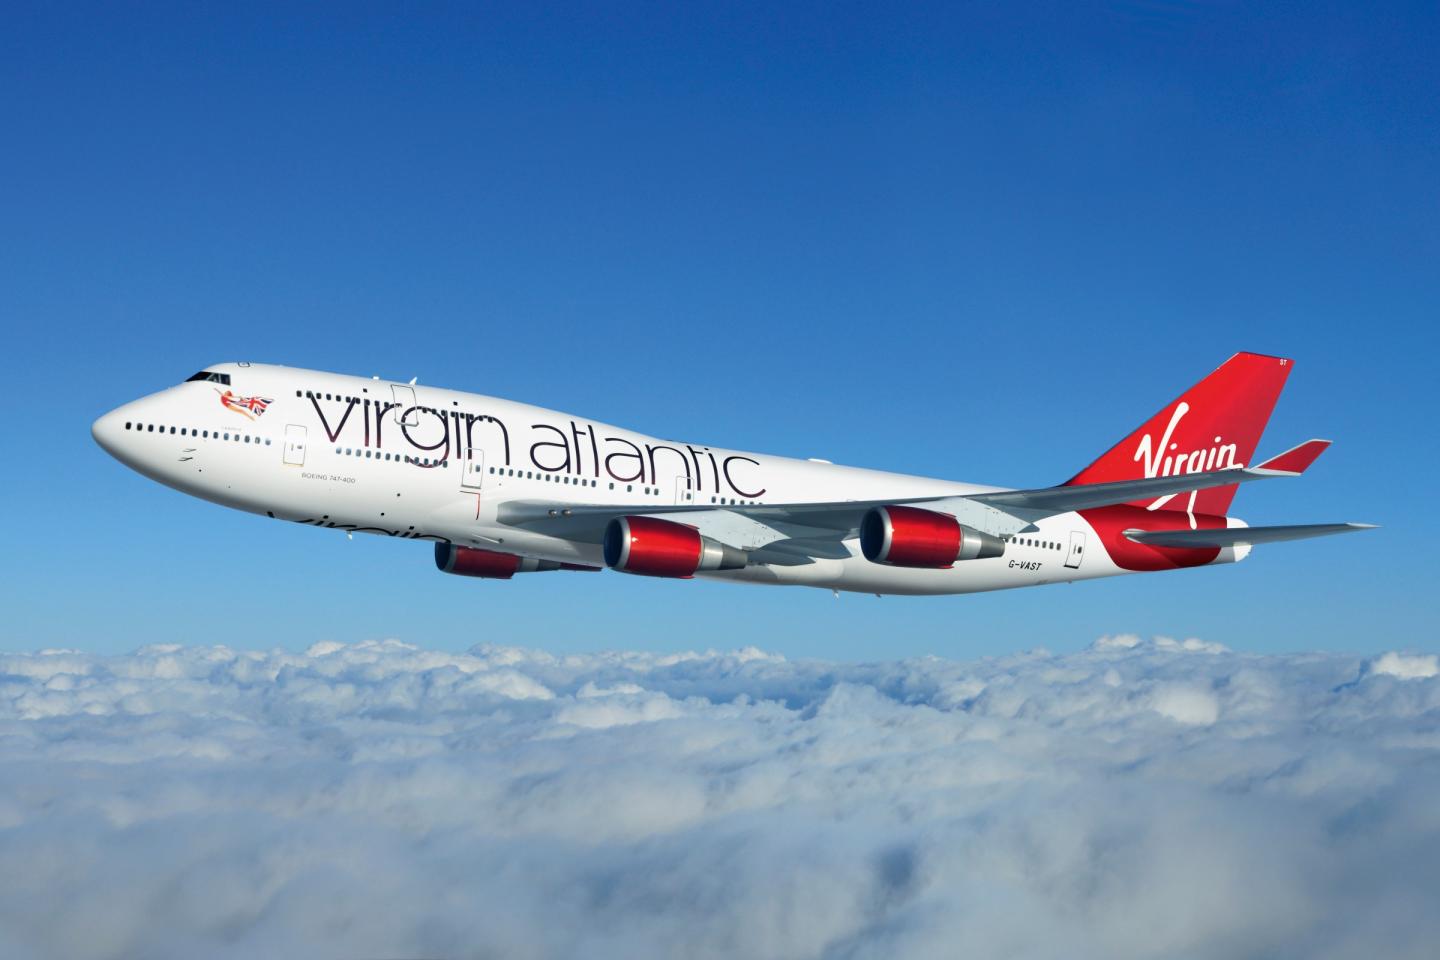 Virgin's Boeing 747